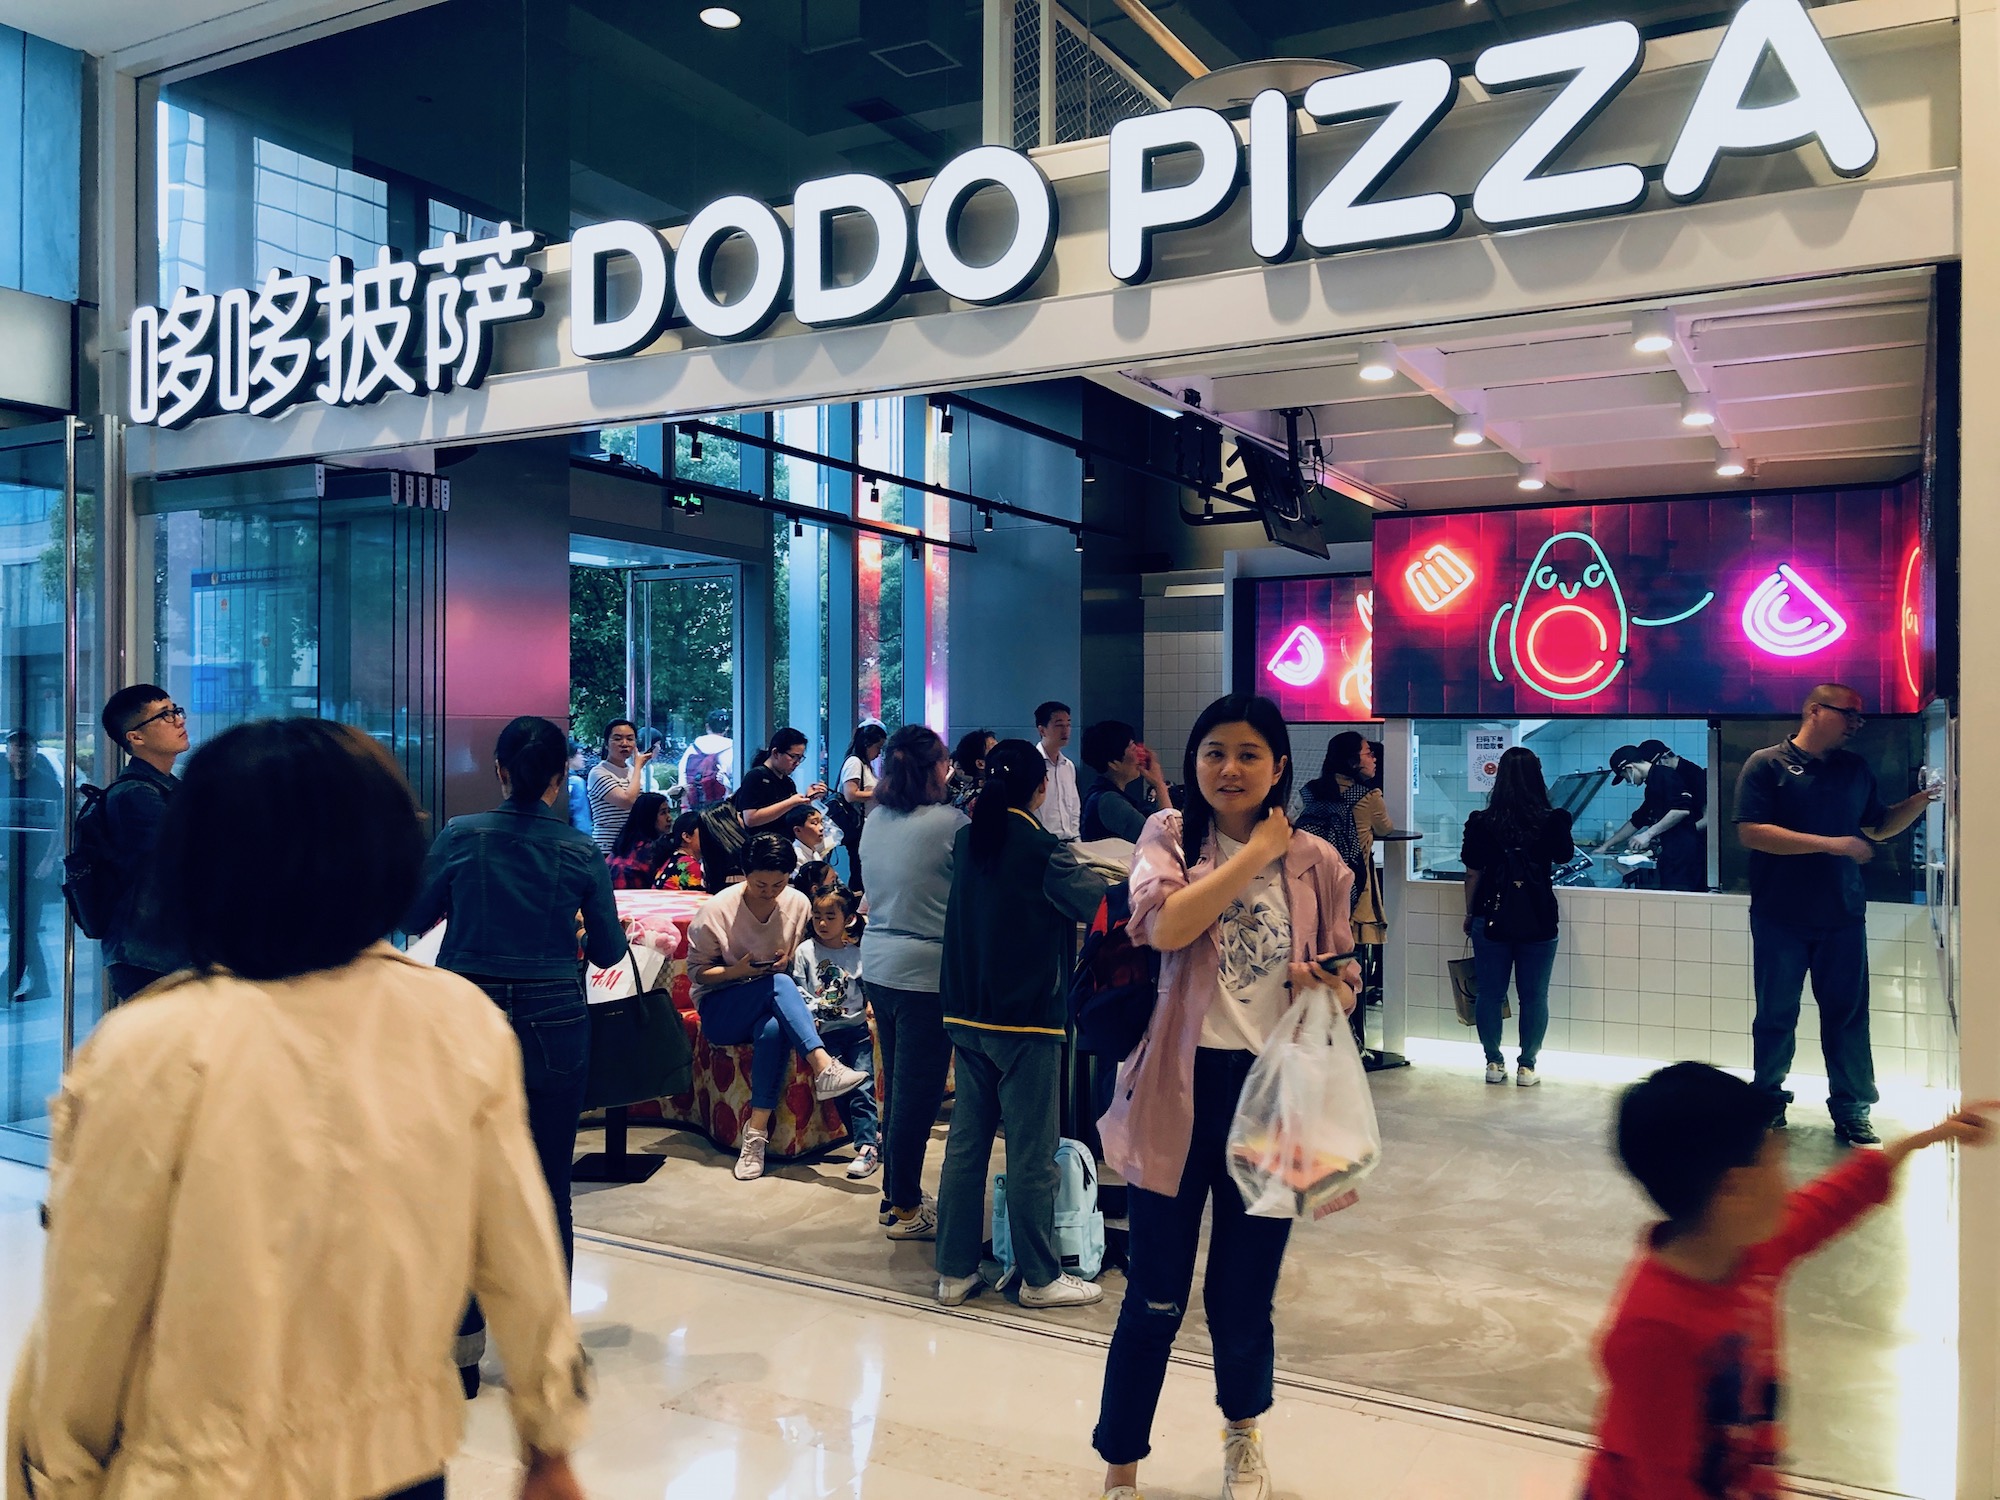 Dodo Pizza in Hangzhou: Day 5